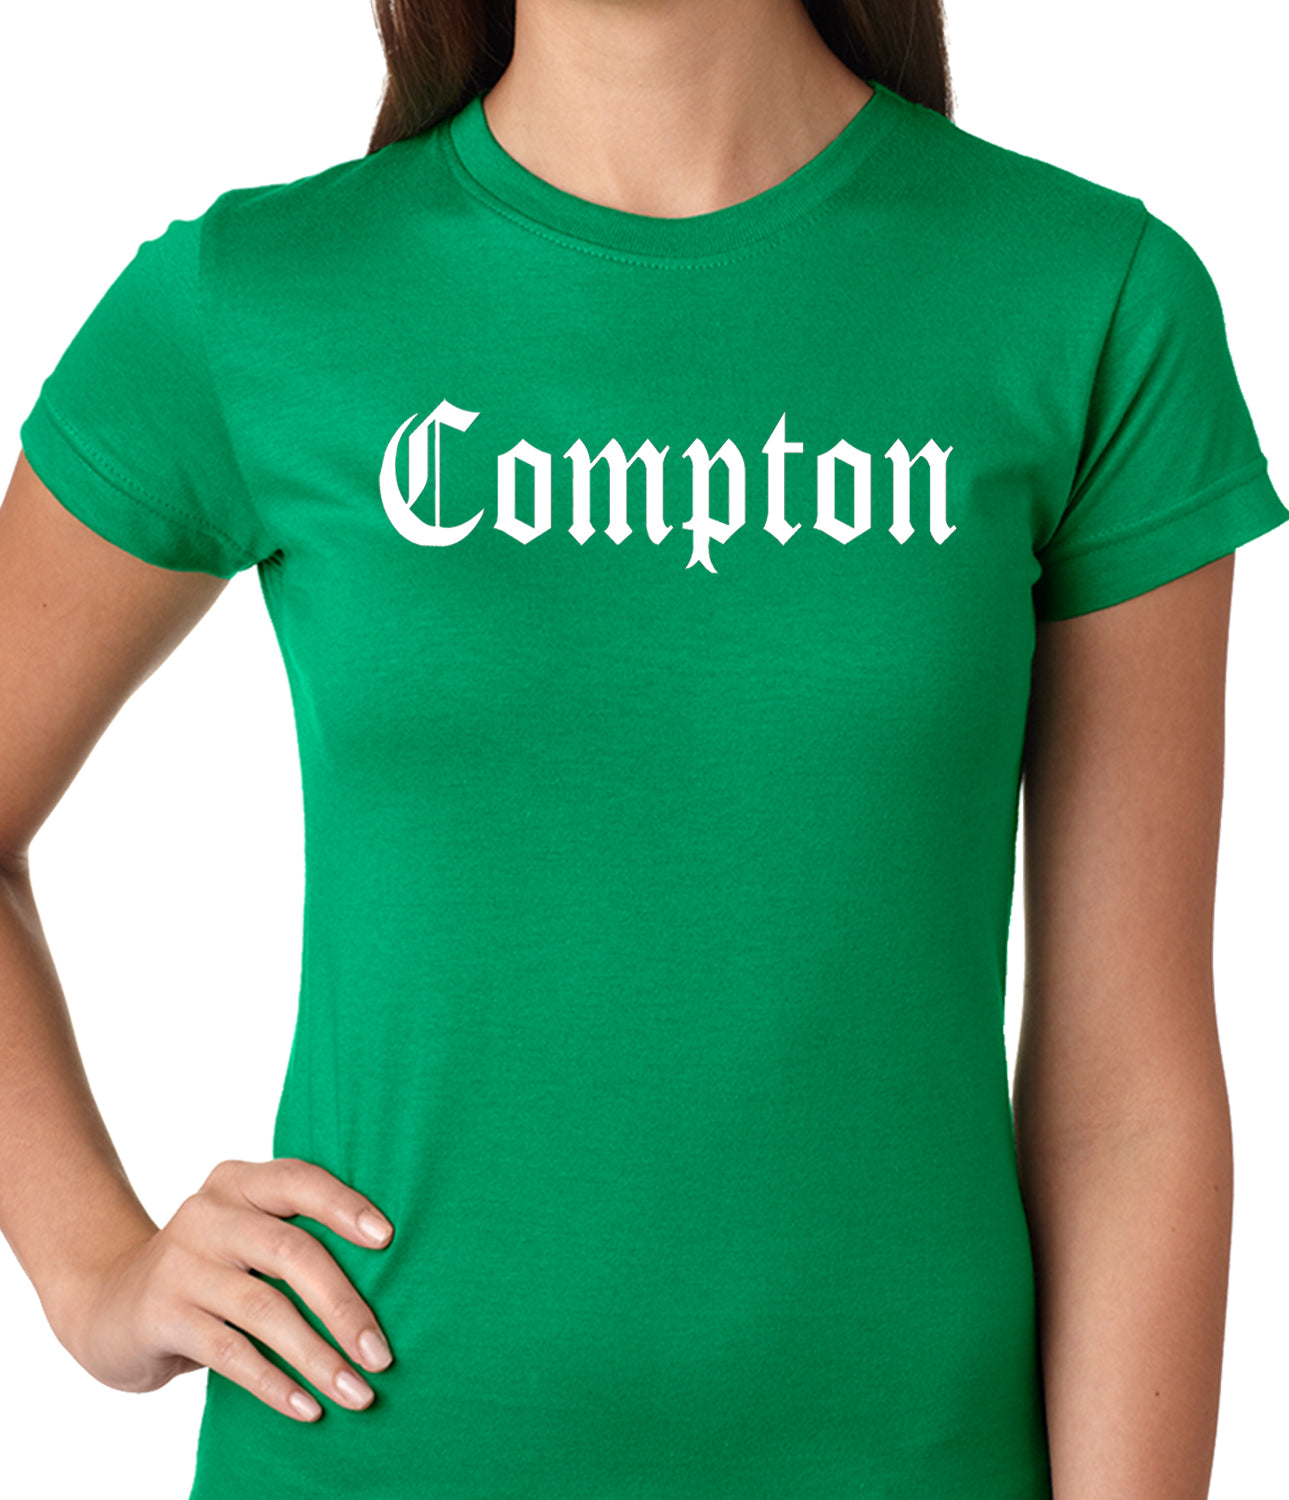 City Of Compton, California Ladies T-shirt